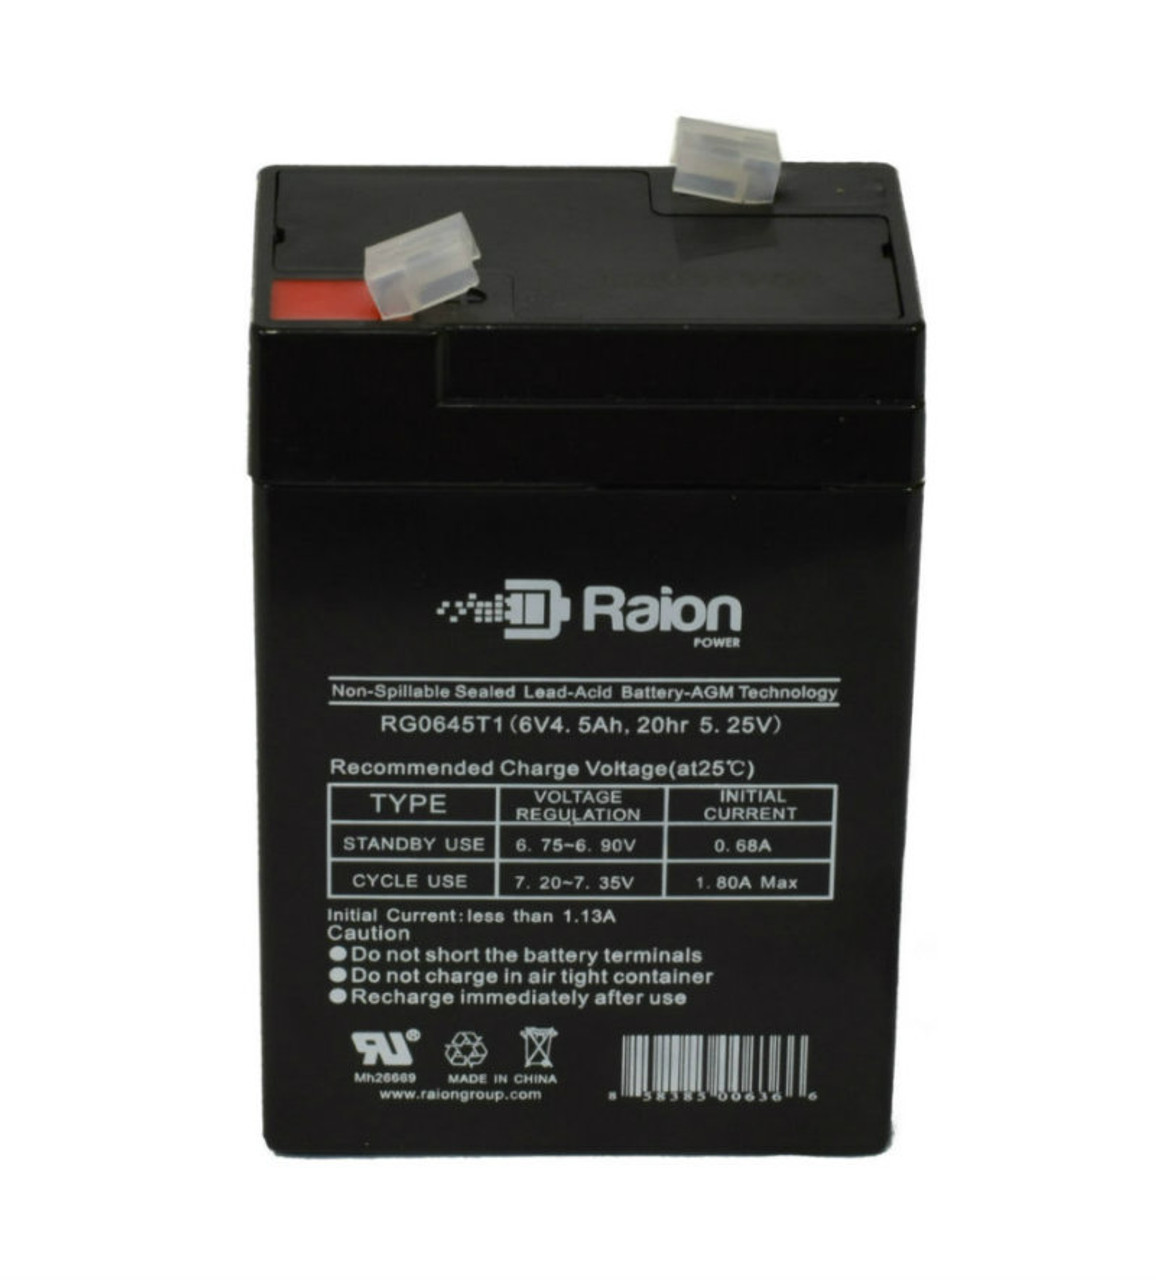 Raion Power RG0645T1 Replacement Battery Cartridge for Emergi-Lite CSM9